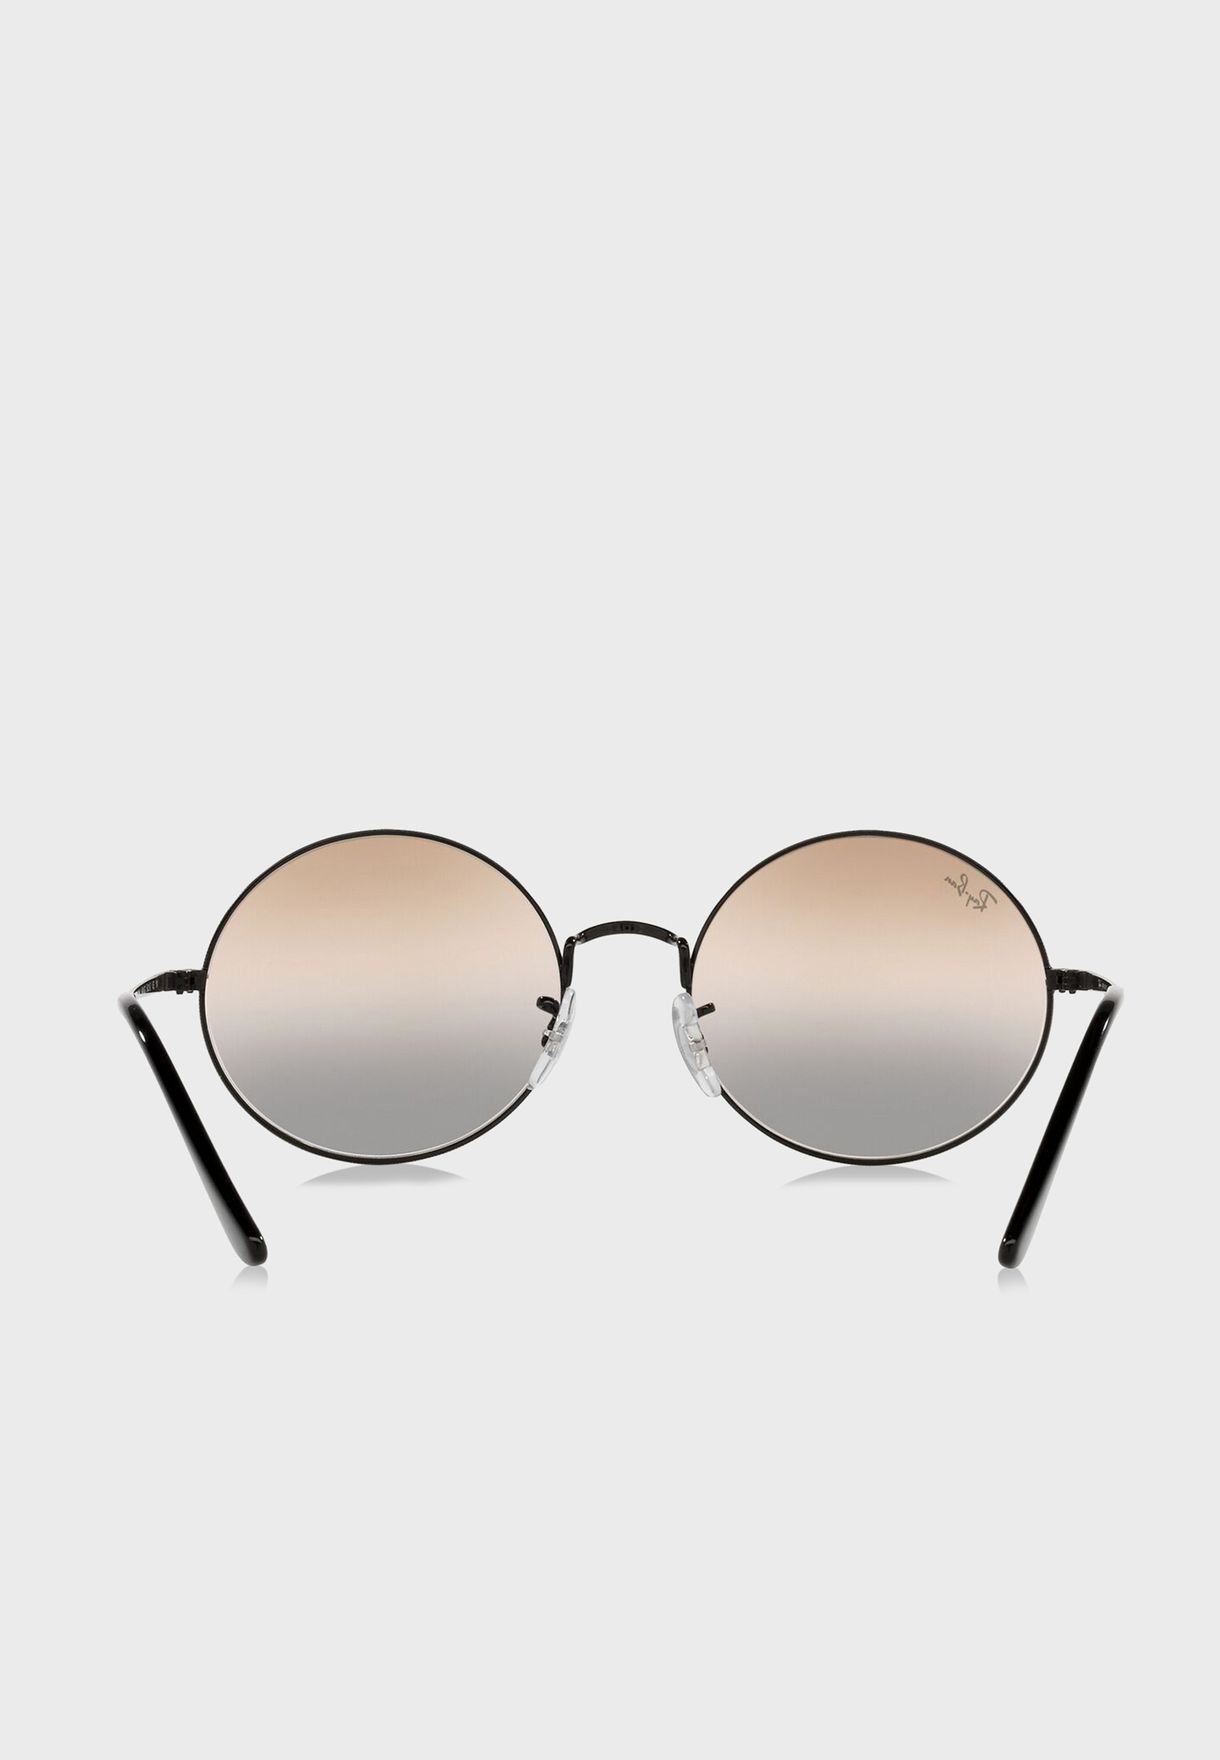 0Rb1970 Round Sunglasses